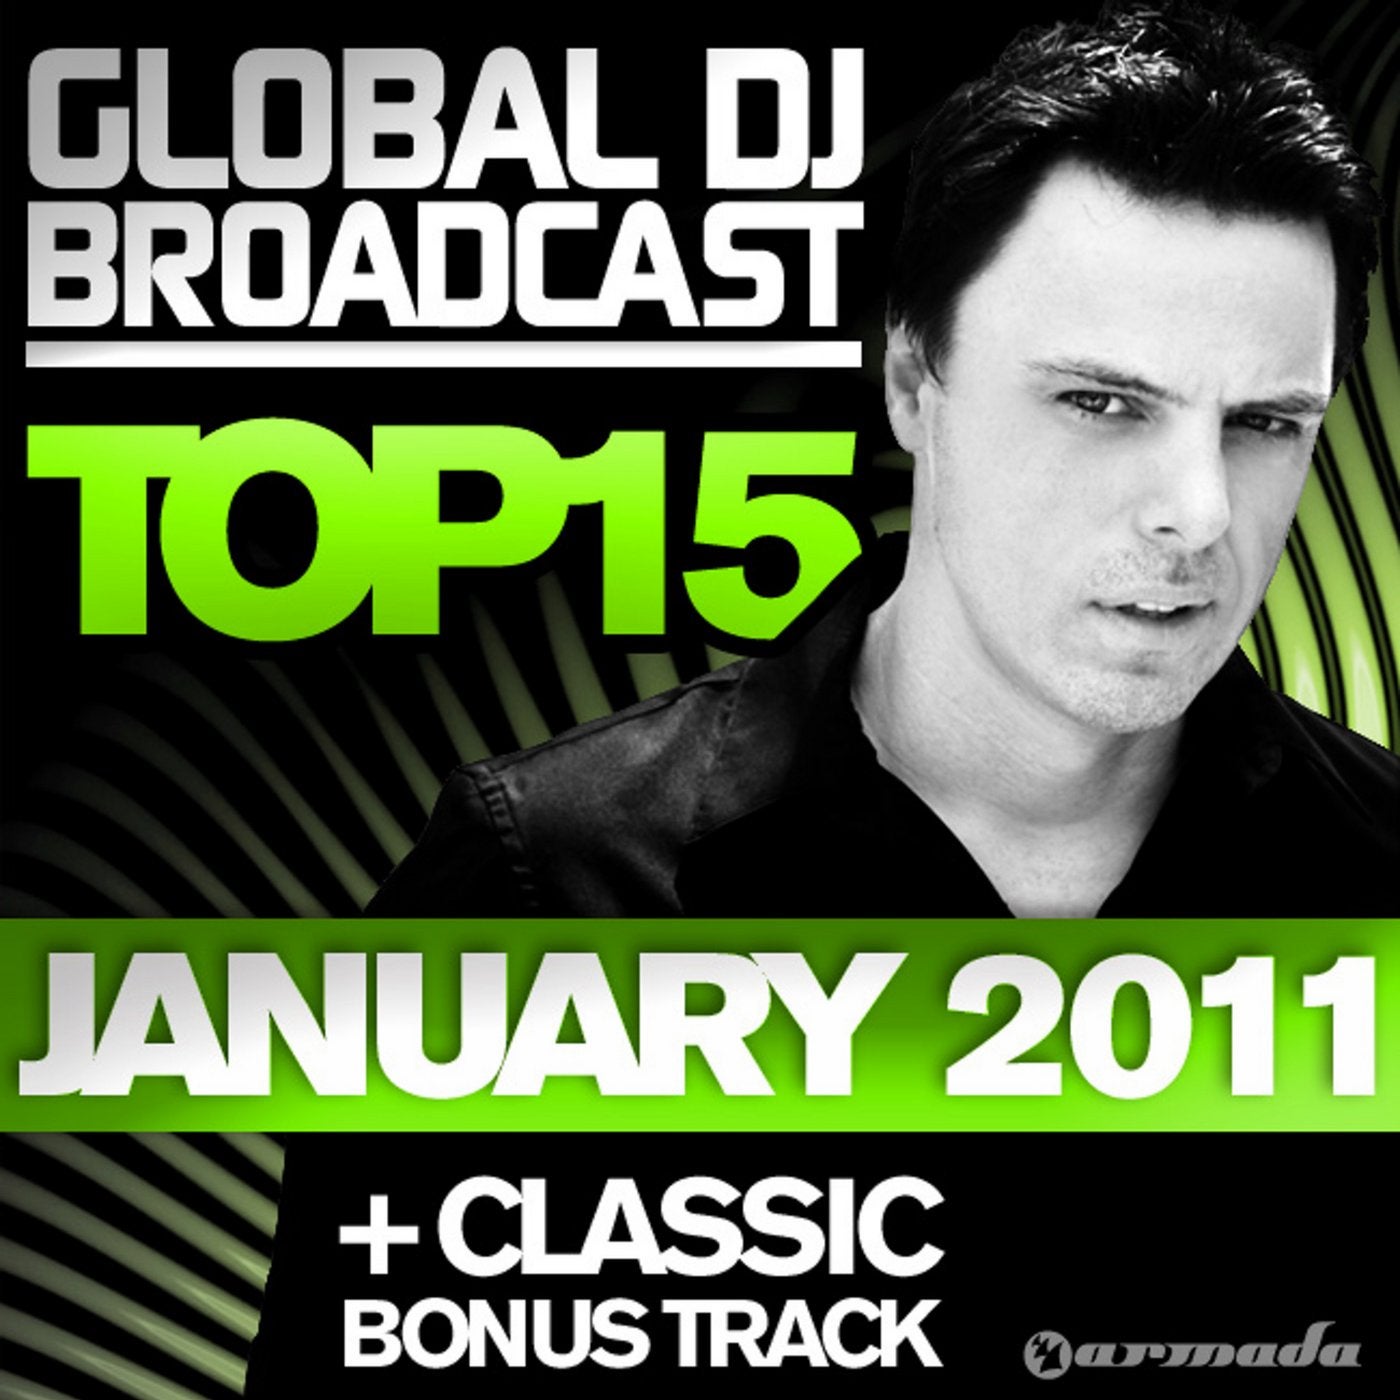 Global DJ Broadcast Top 15 - January 2011 - Including Classic Bonus Track